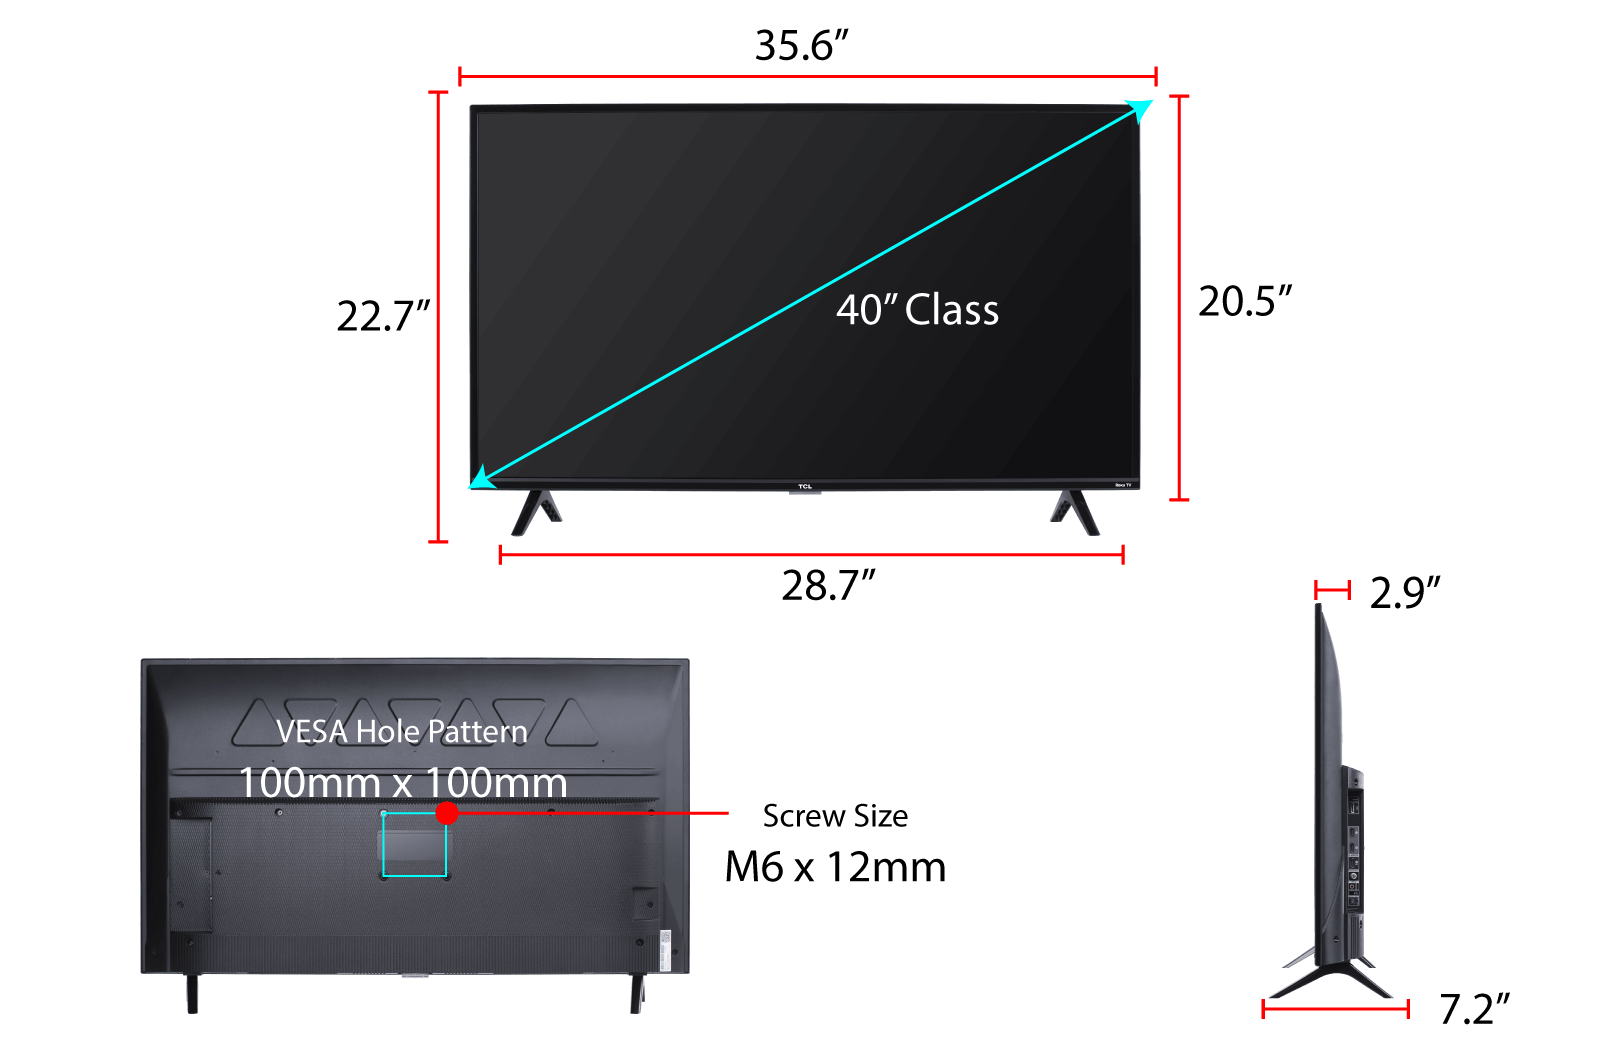  TCL 40S325 TV inteligente de 40 pulgadas 1080p Smart